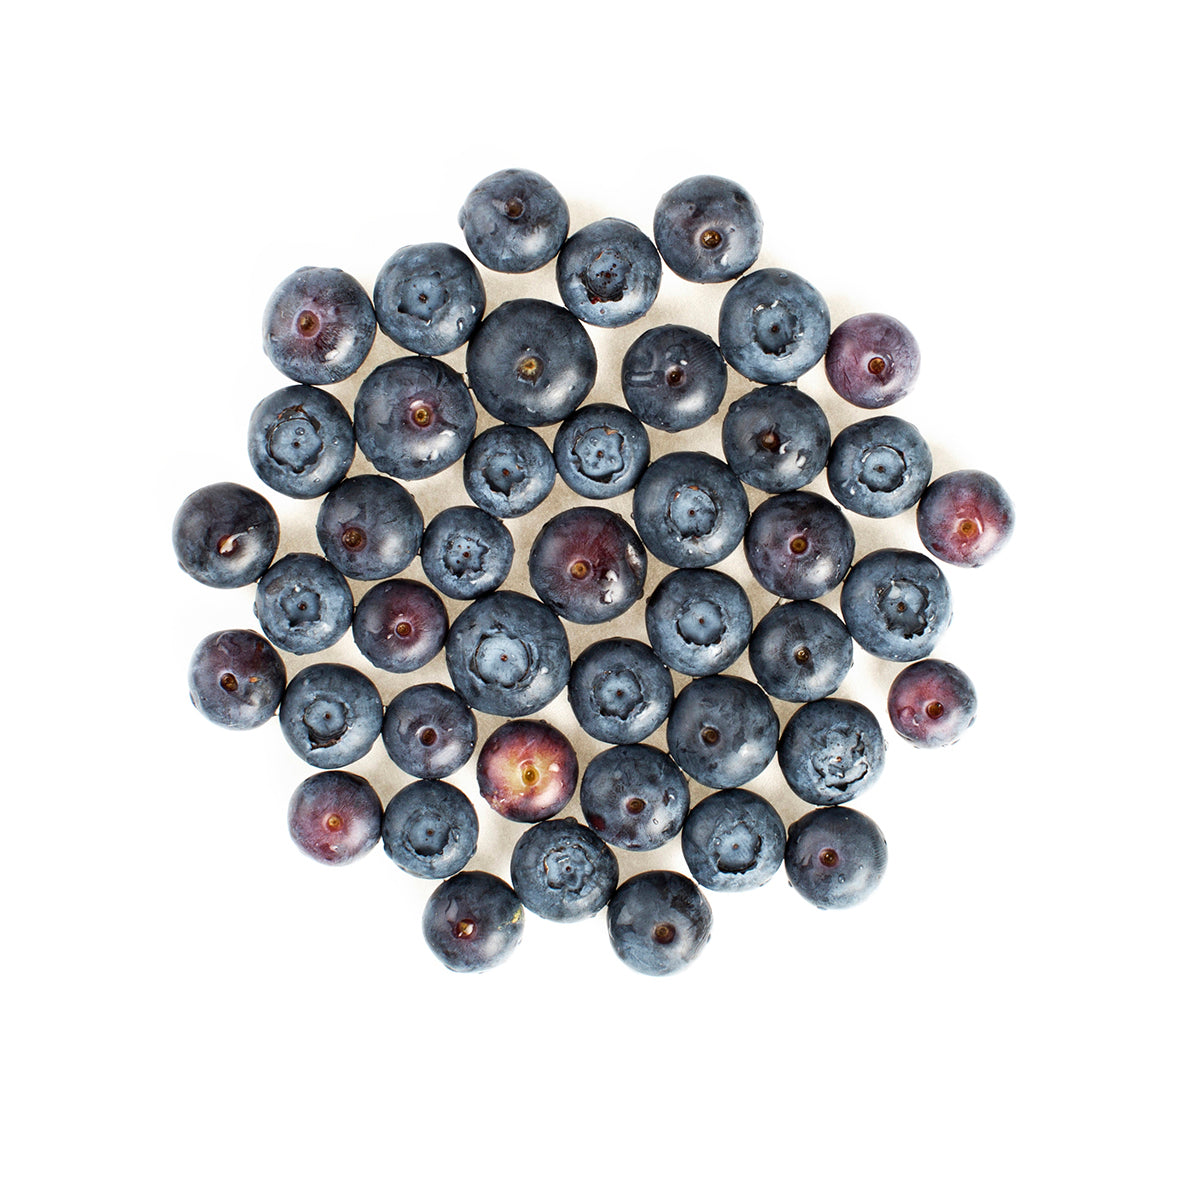 Driscoll'S Blueberries 6 OZ